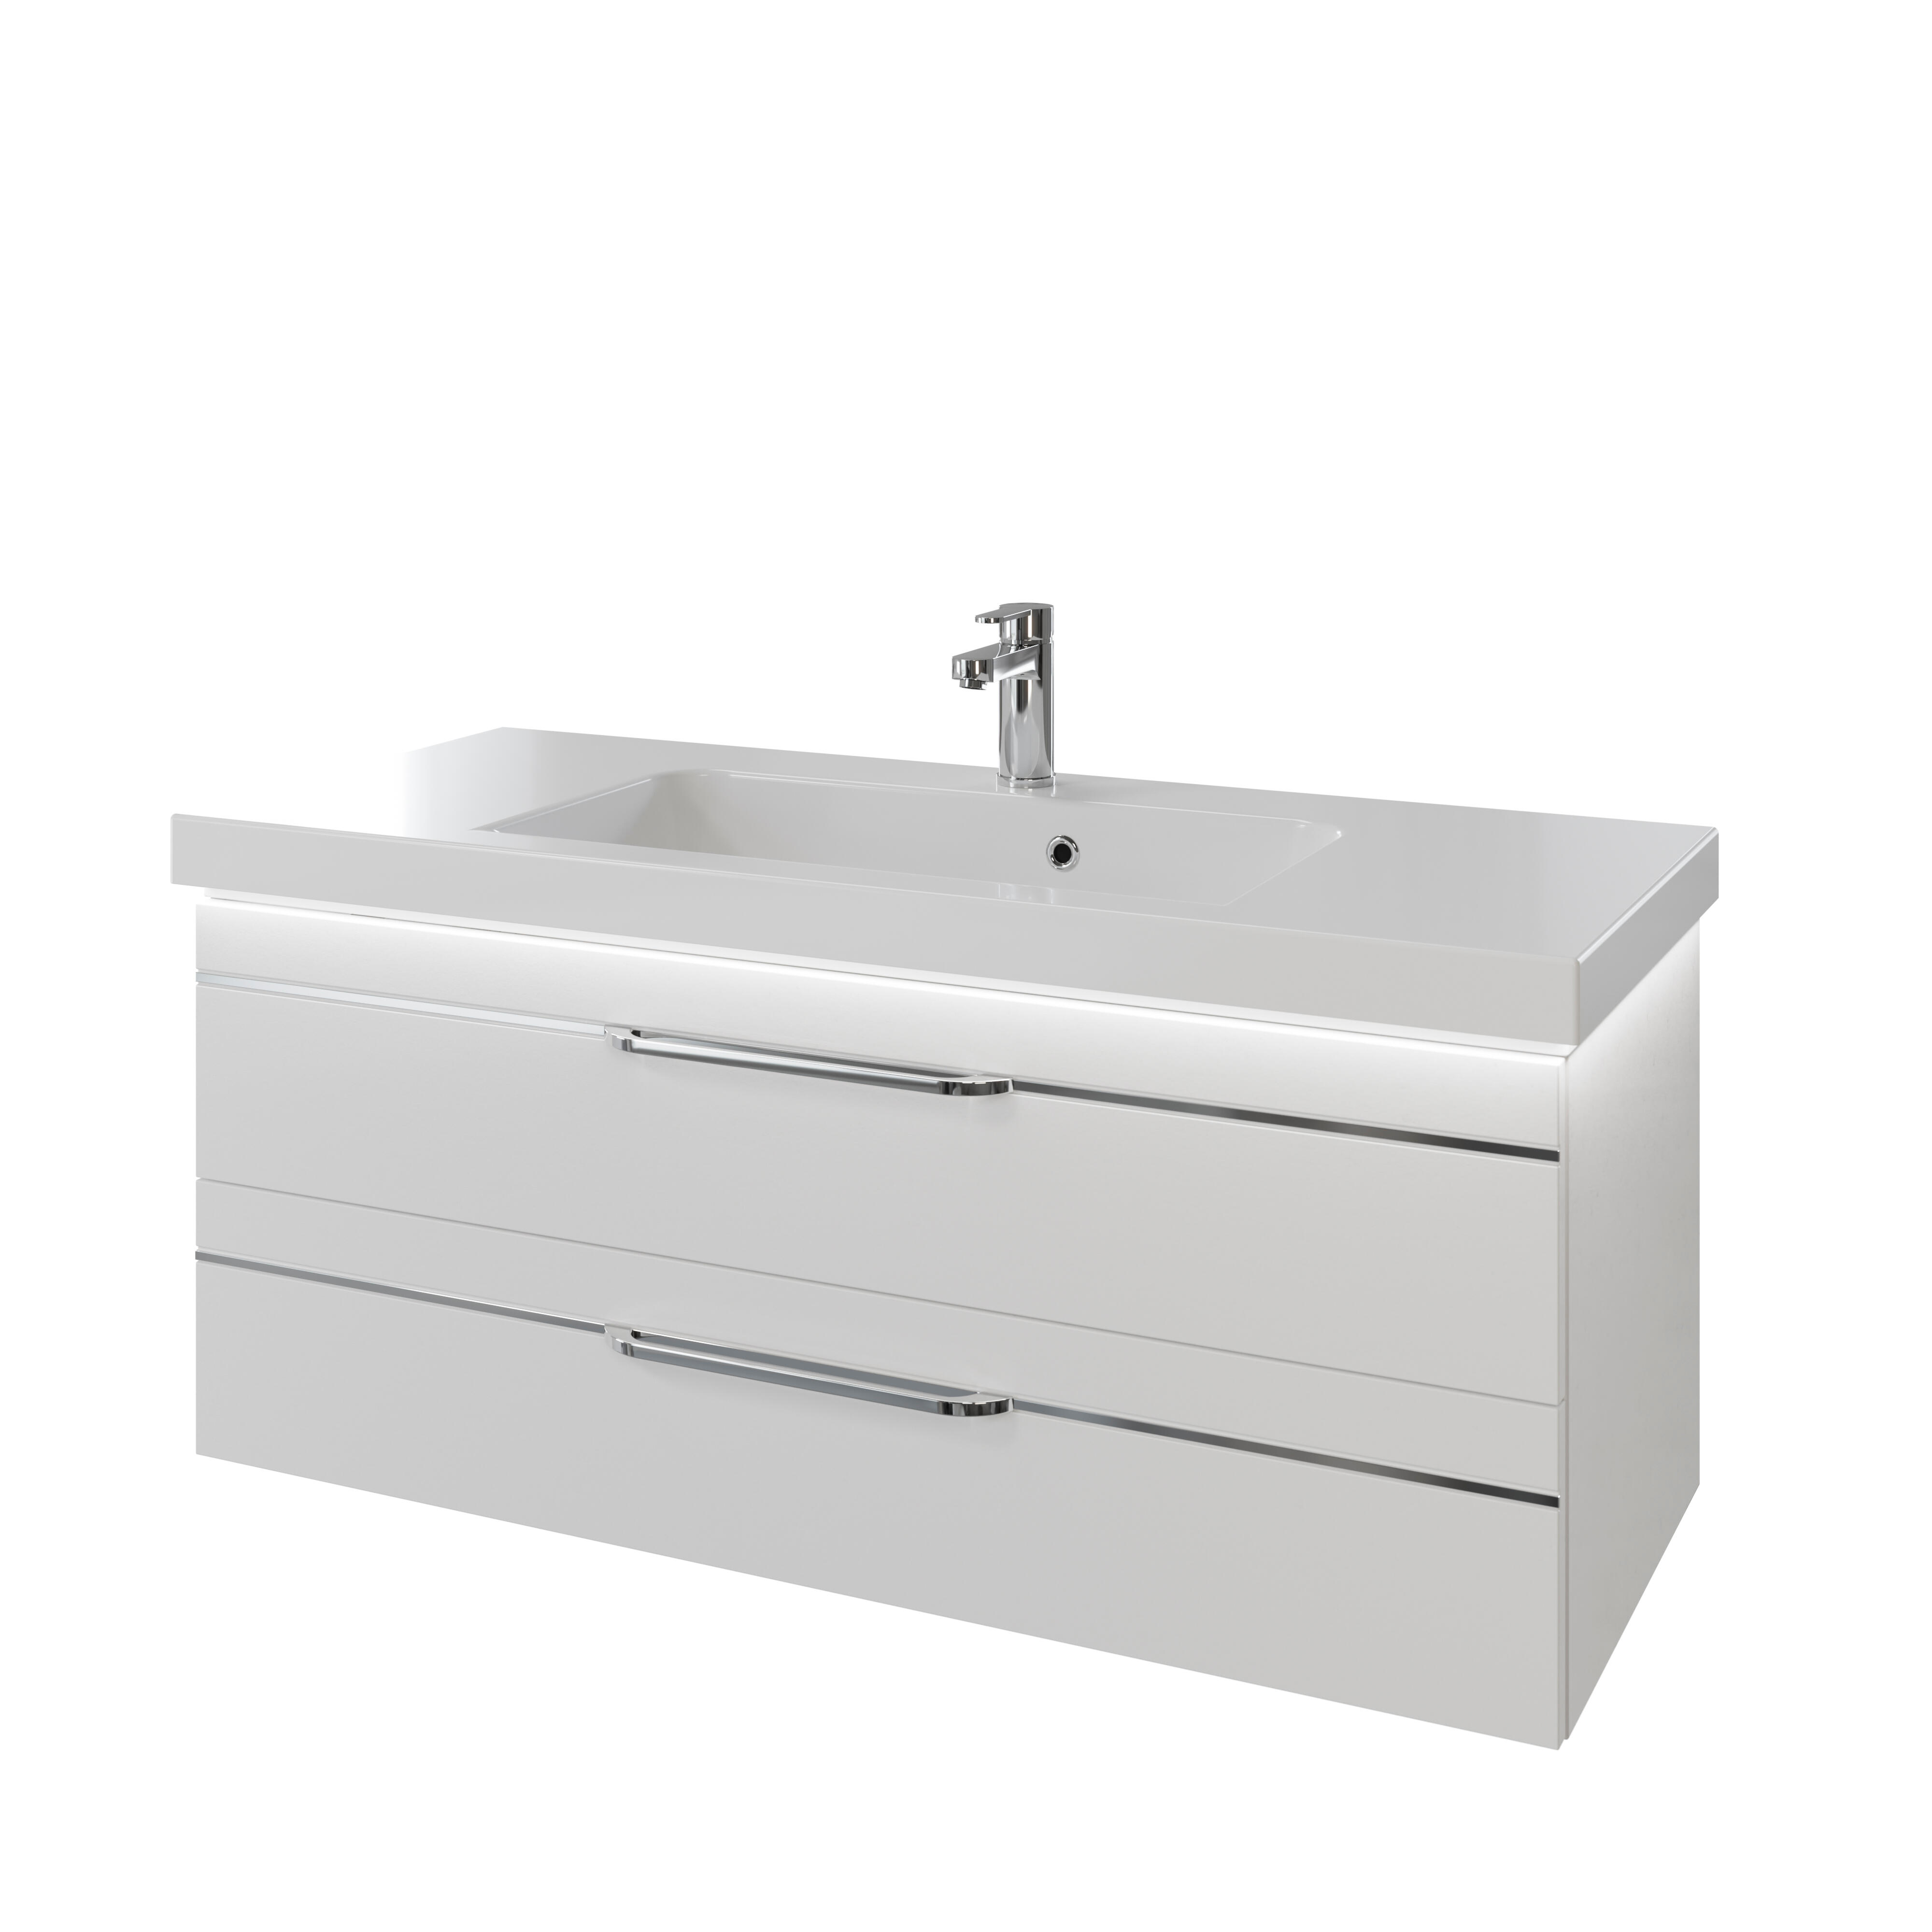 Mueble de baño con lavabo balto blanco 120x49 cm